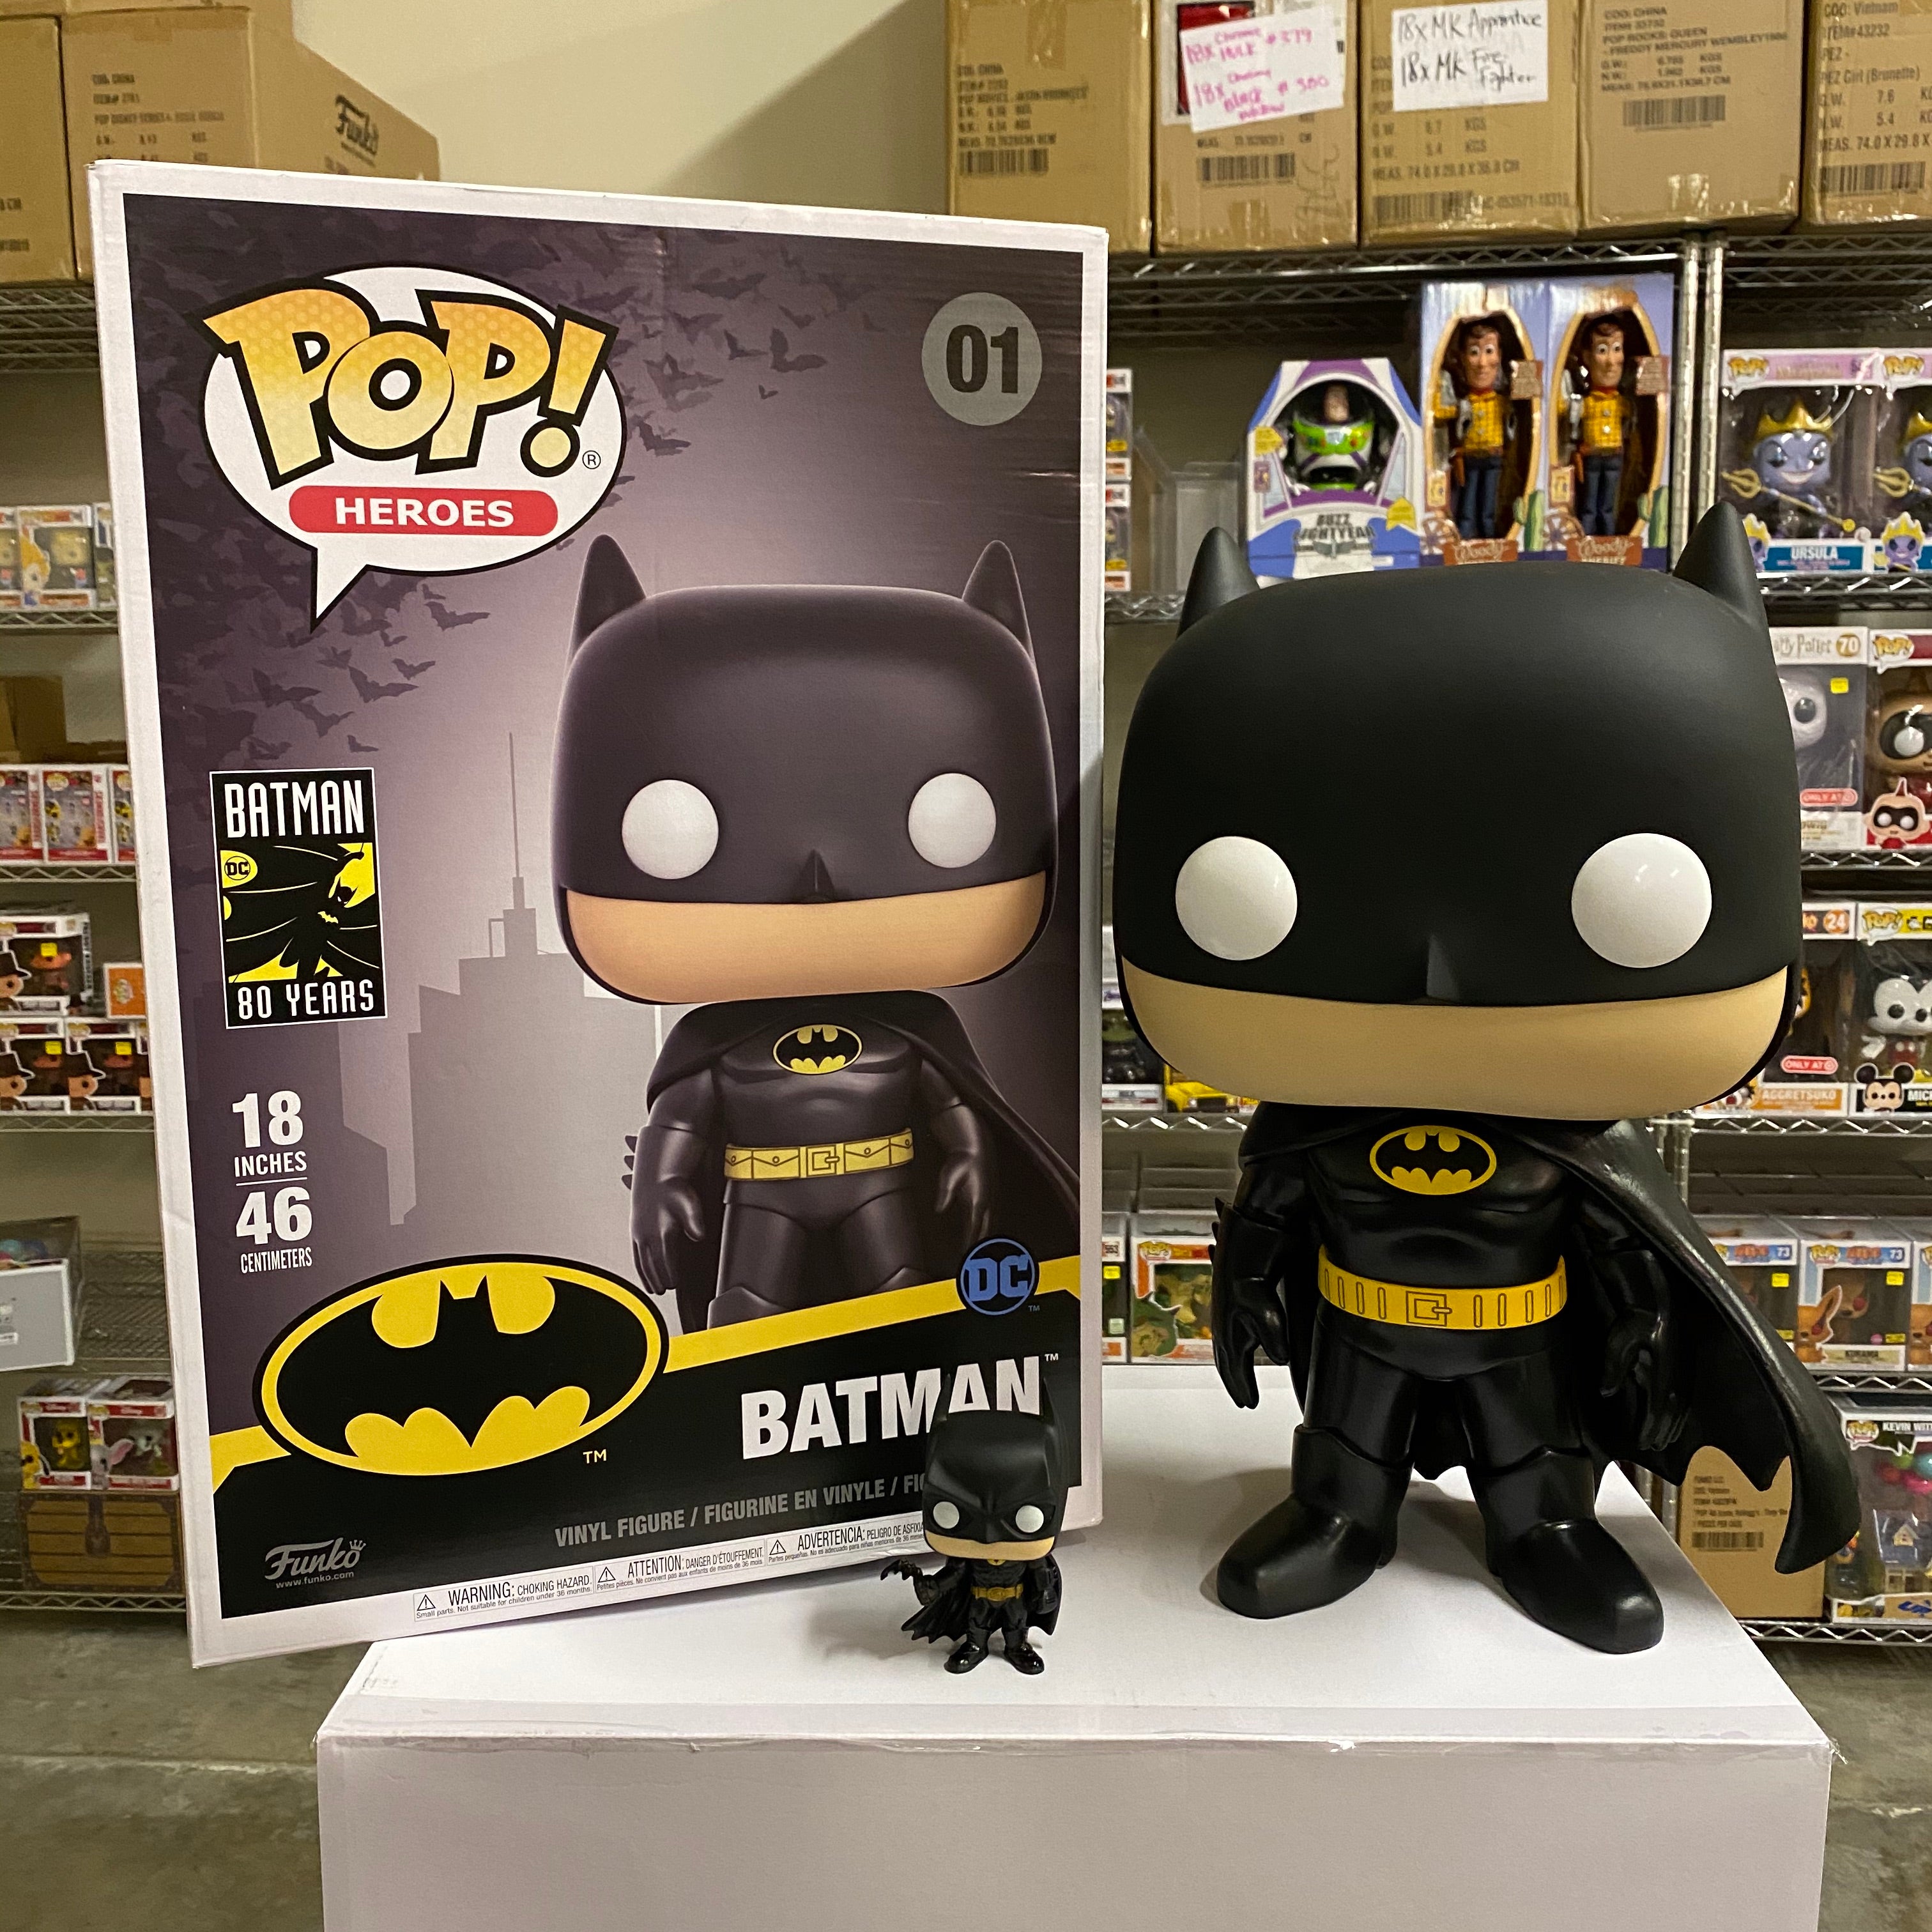 Batman POP! Super Size 19 Vinyl figurine Batman 001